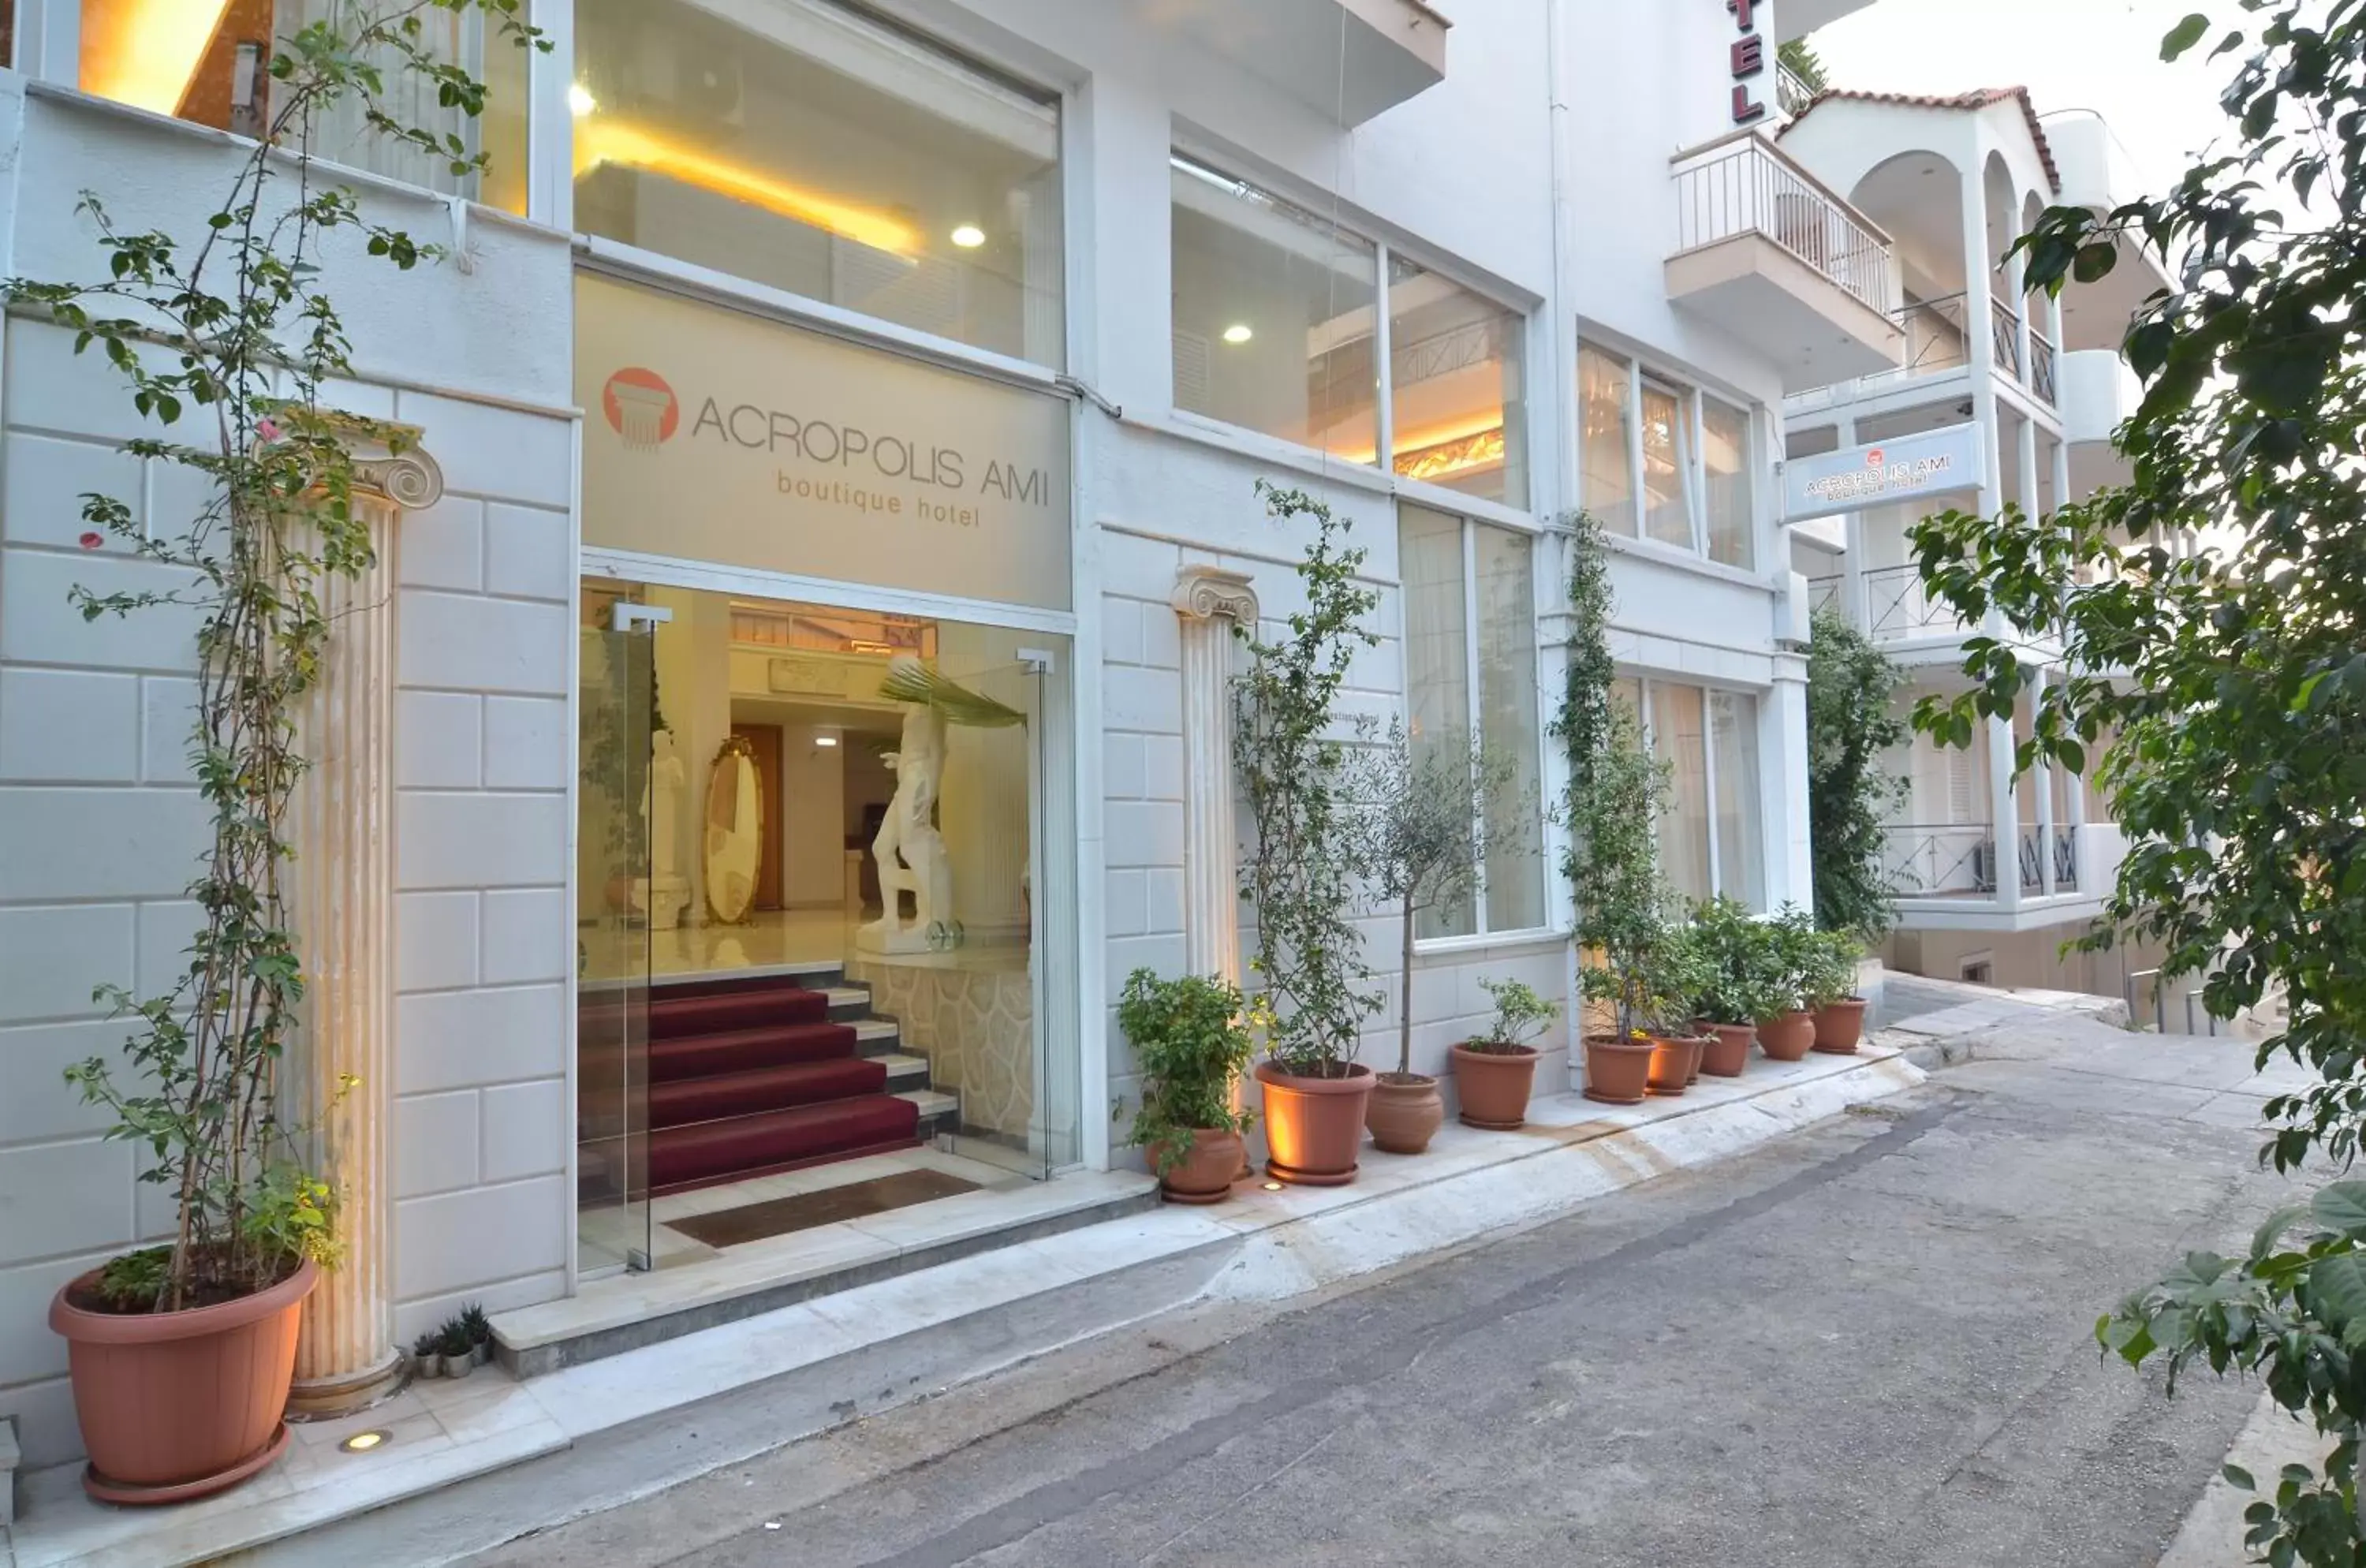 Facade/entrance in Acropolis Ami Boutique Hotel